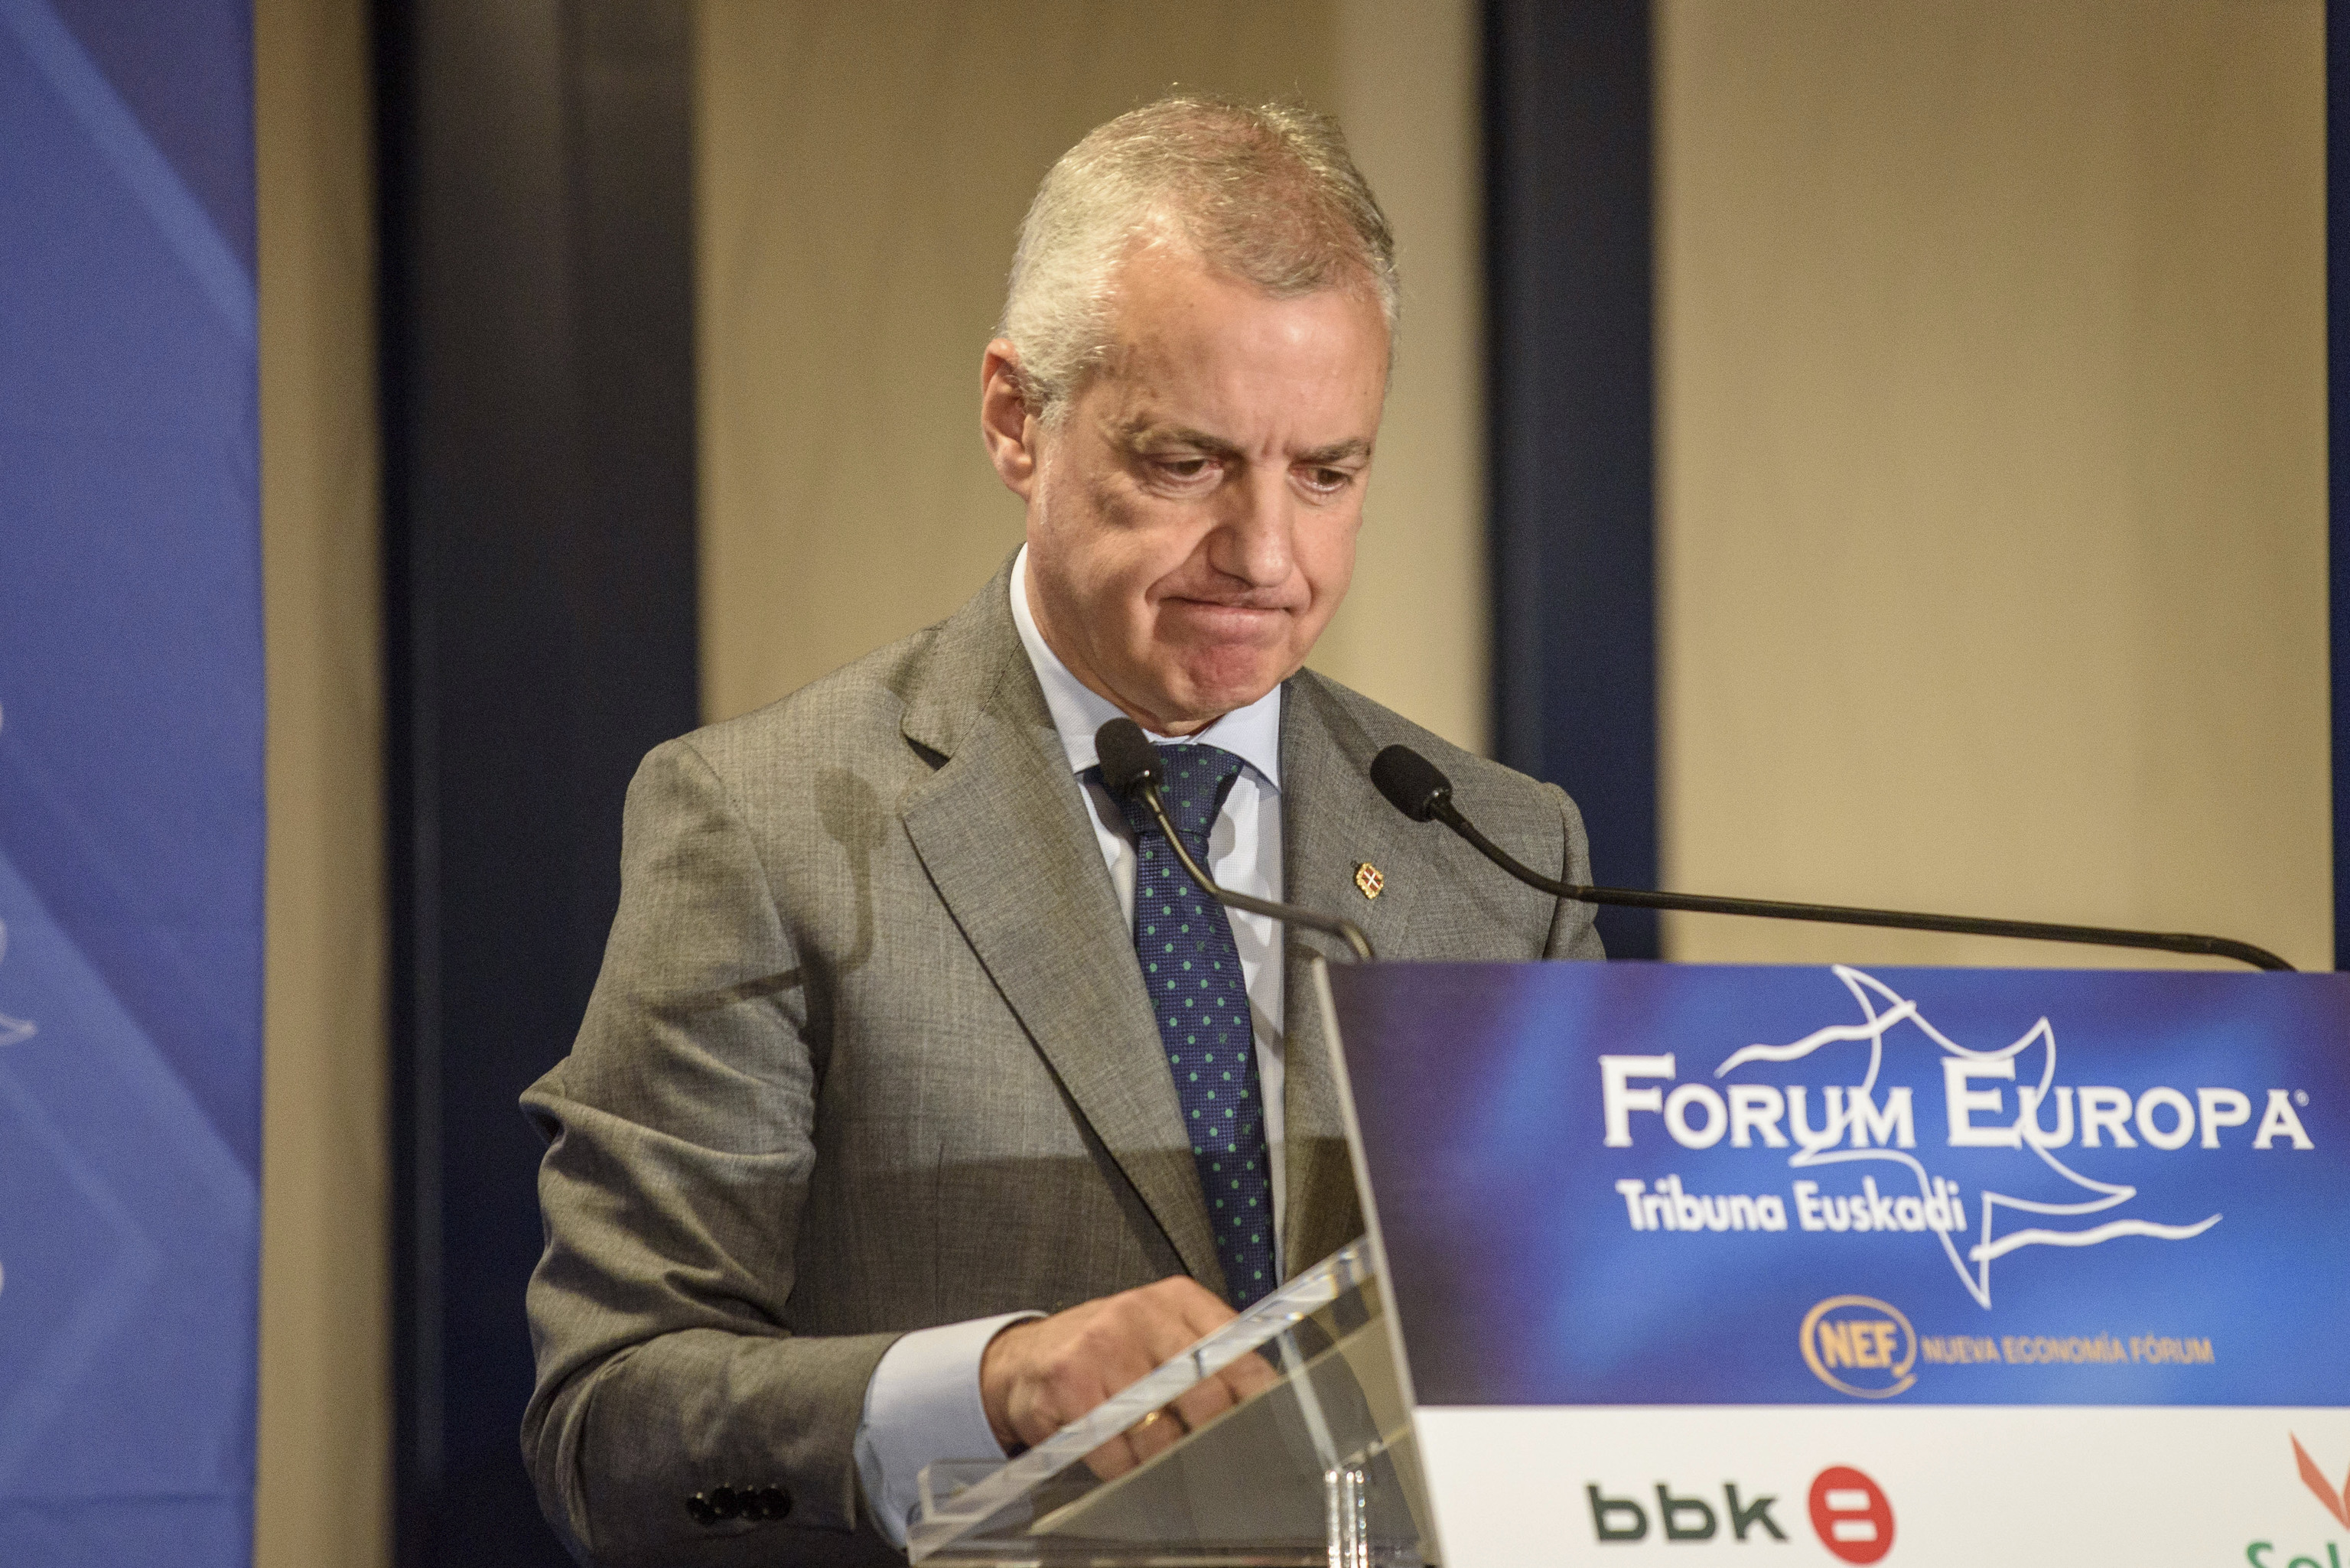 El lehendakari Iigo Urkullu durante su ltima intervencin en el Forum Europa Tribuna Euskadi en Bilbao.